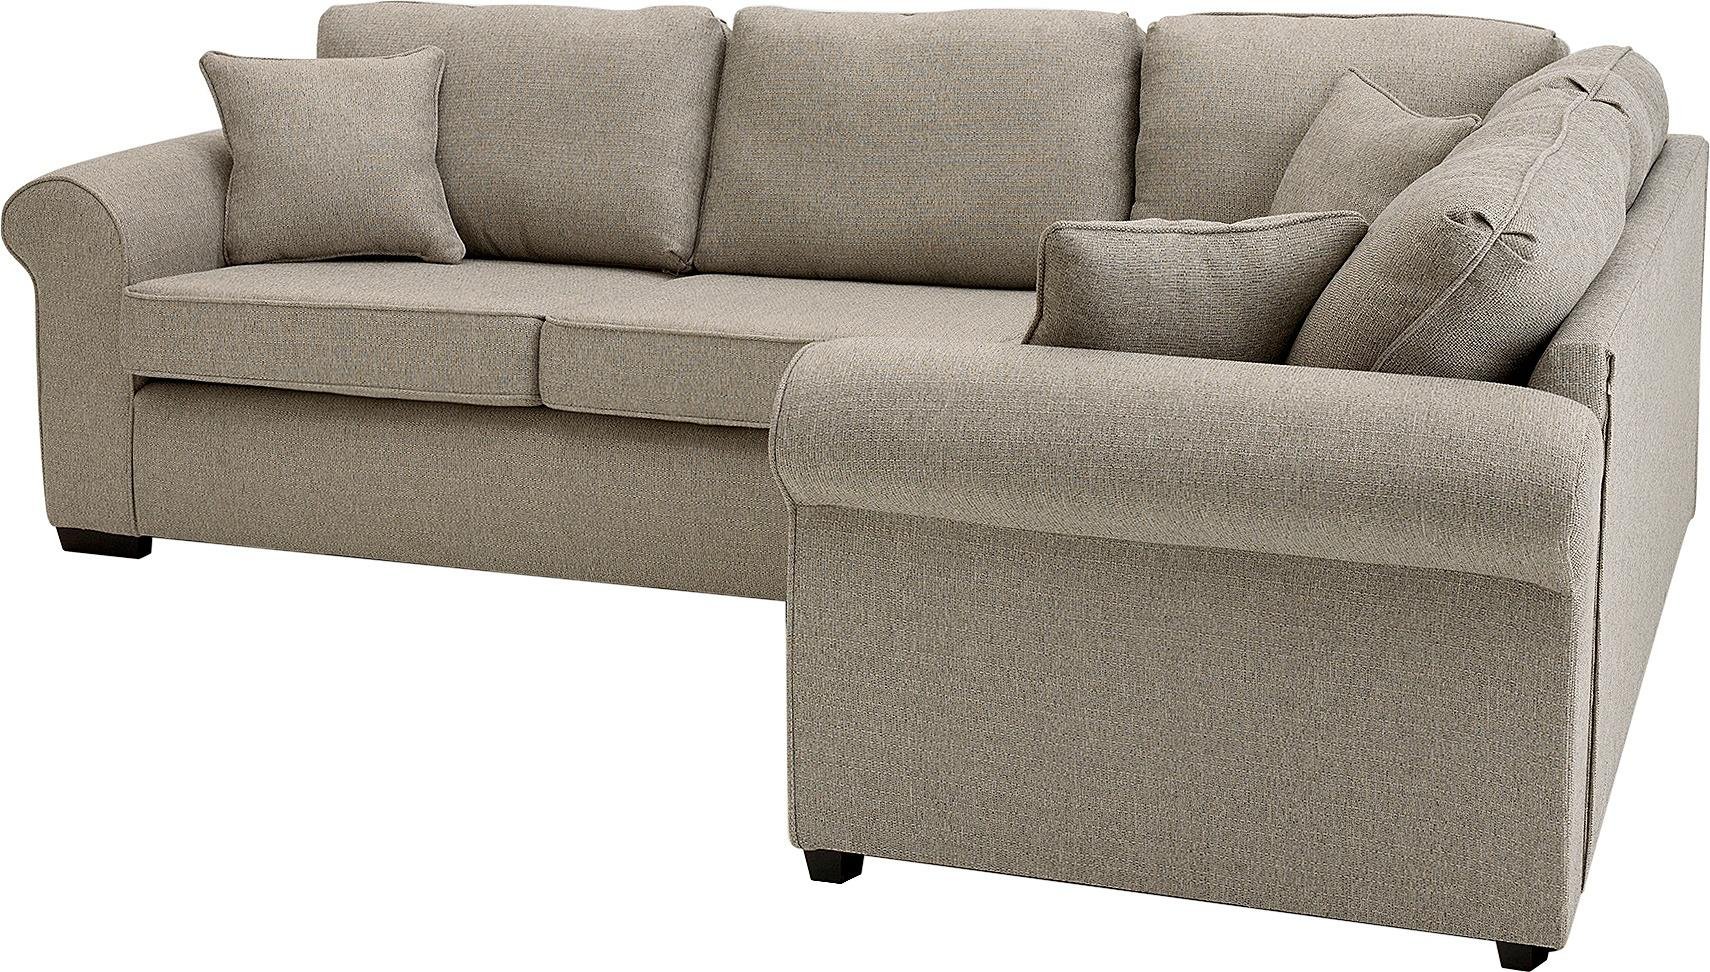 Buy Collection Rattan Effect 6 Seater Patio Sofa Set 2 Sofas at Argos ...